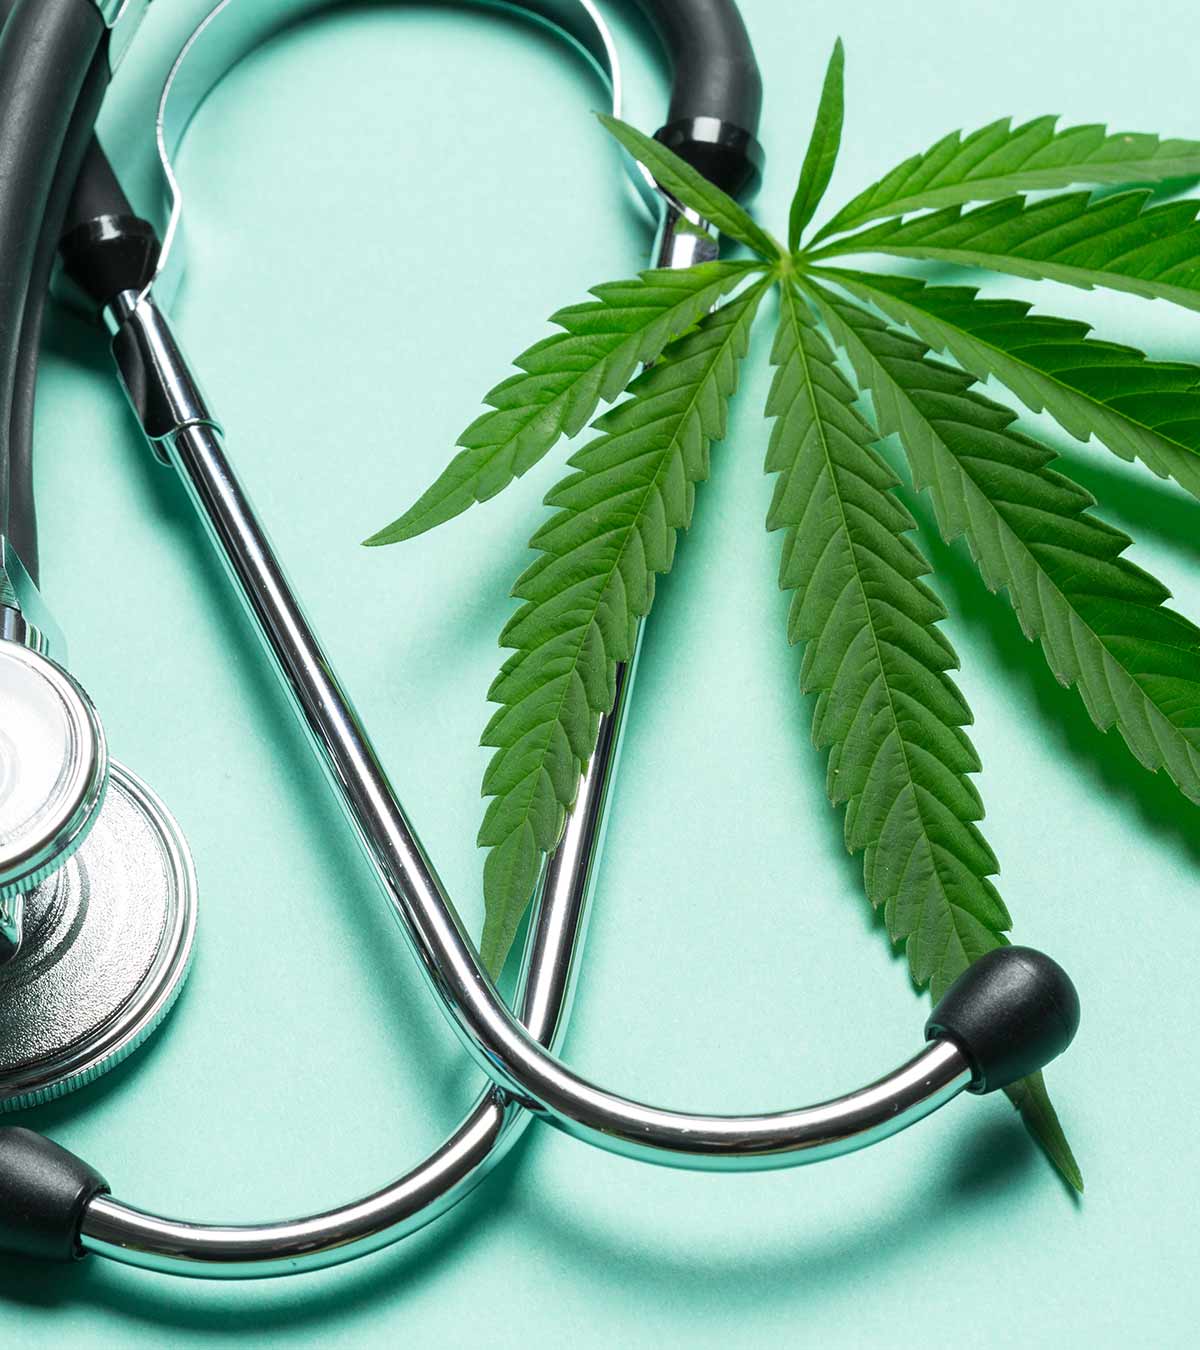 7 Medical Health Uses Of Marijuana For Kids